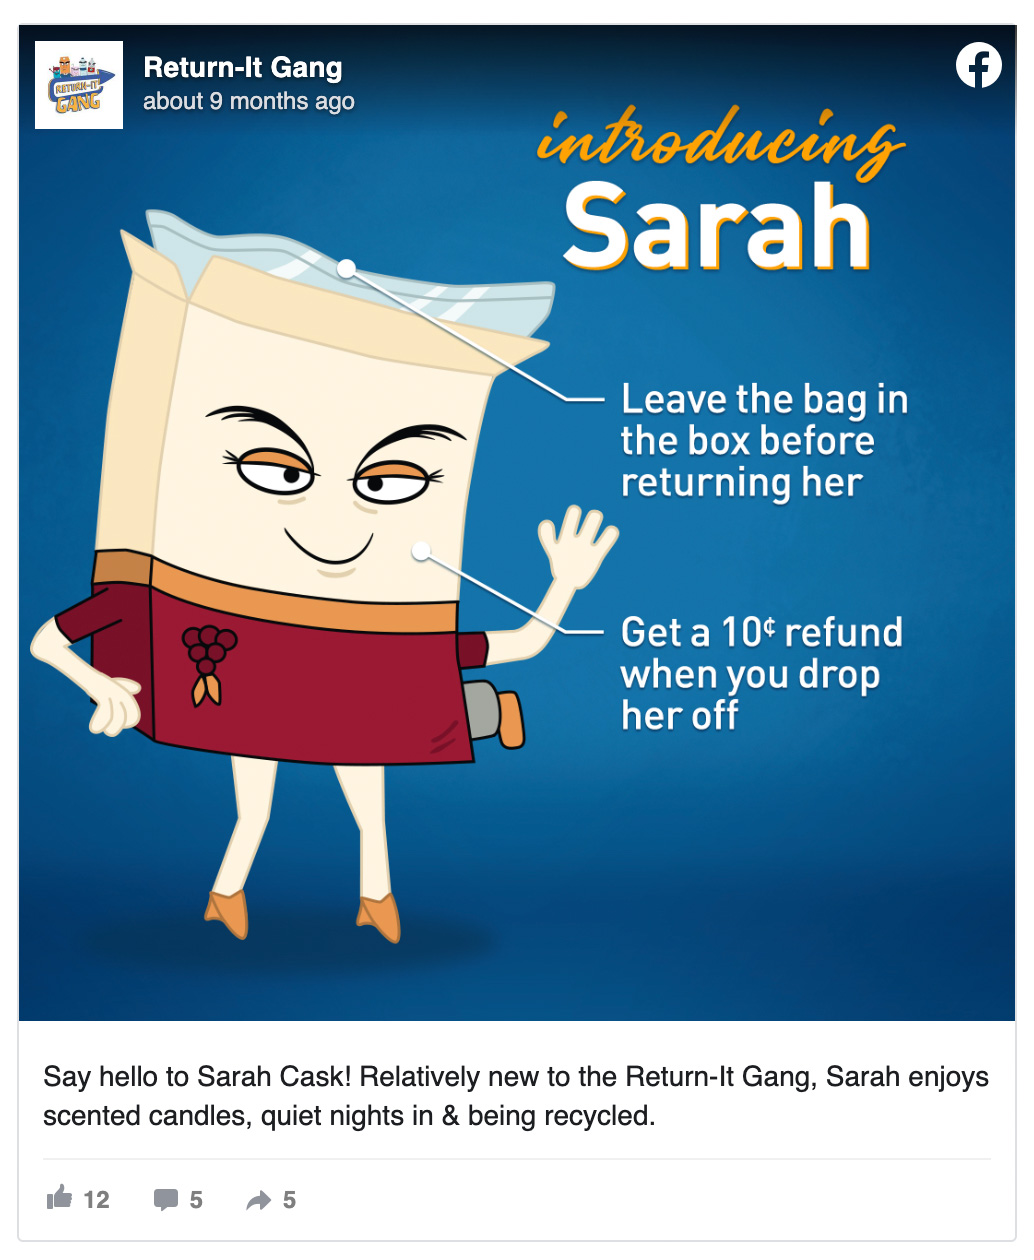 Sarah Cask Bag-In-A-Box